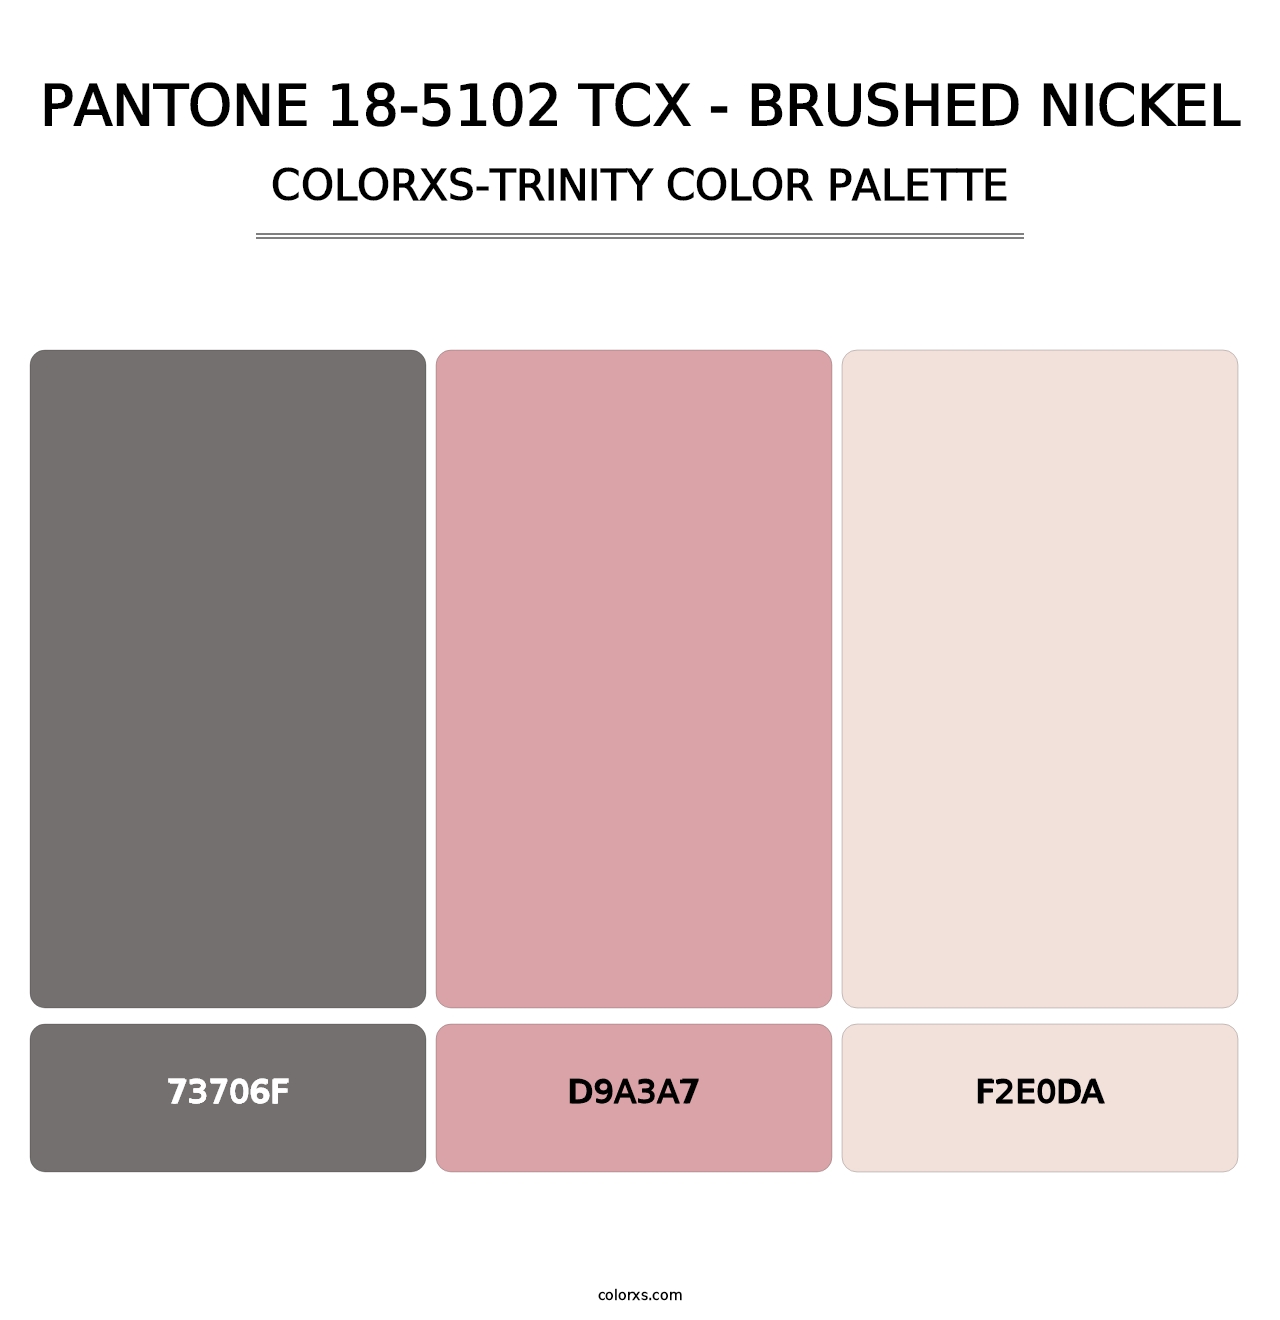 PANTONE 18-5102 TCX - Brushed Nickel - Colorxs Trinity Palette